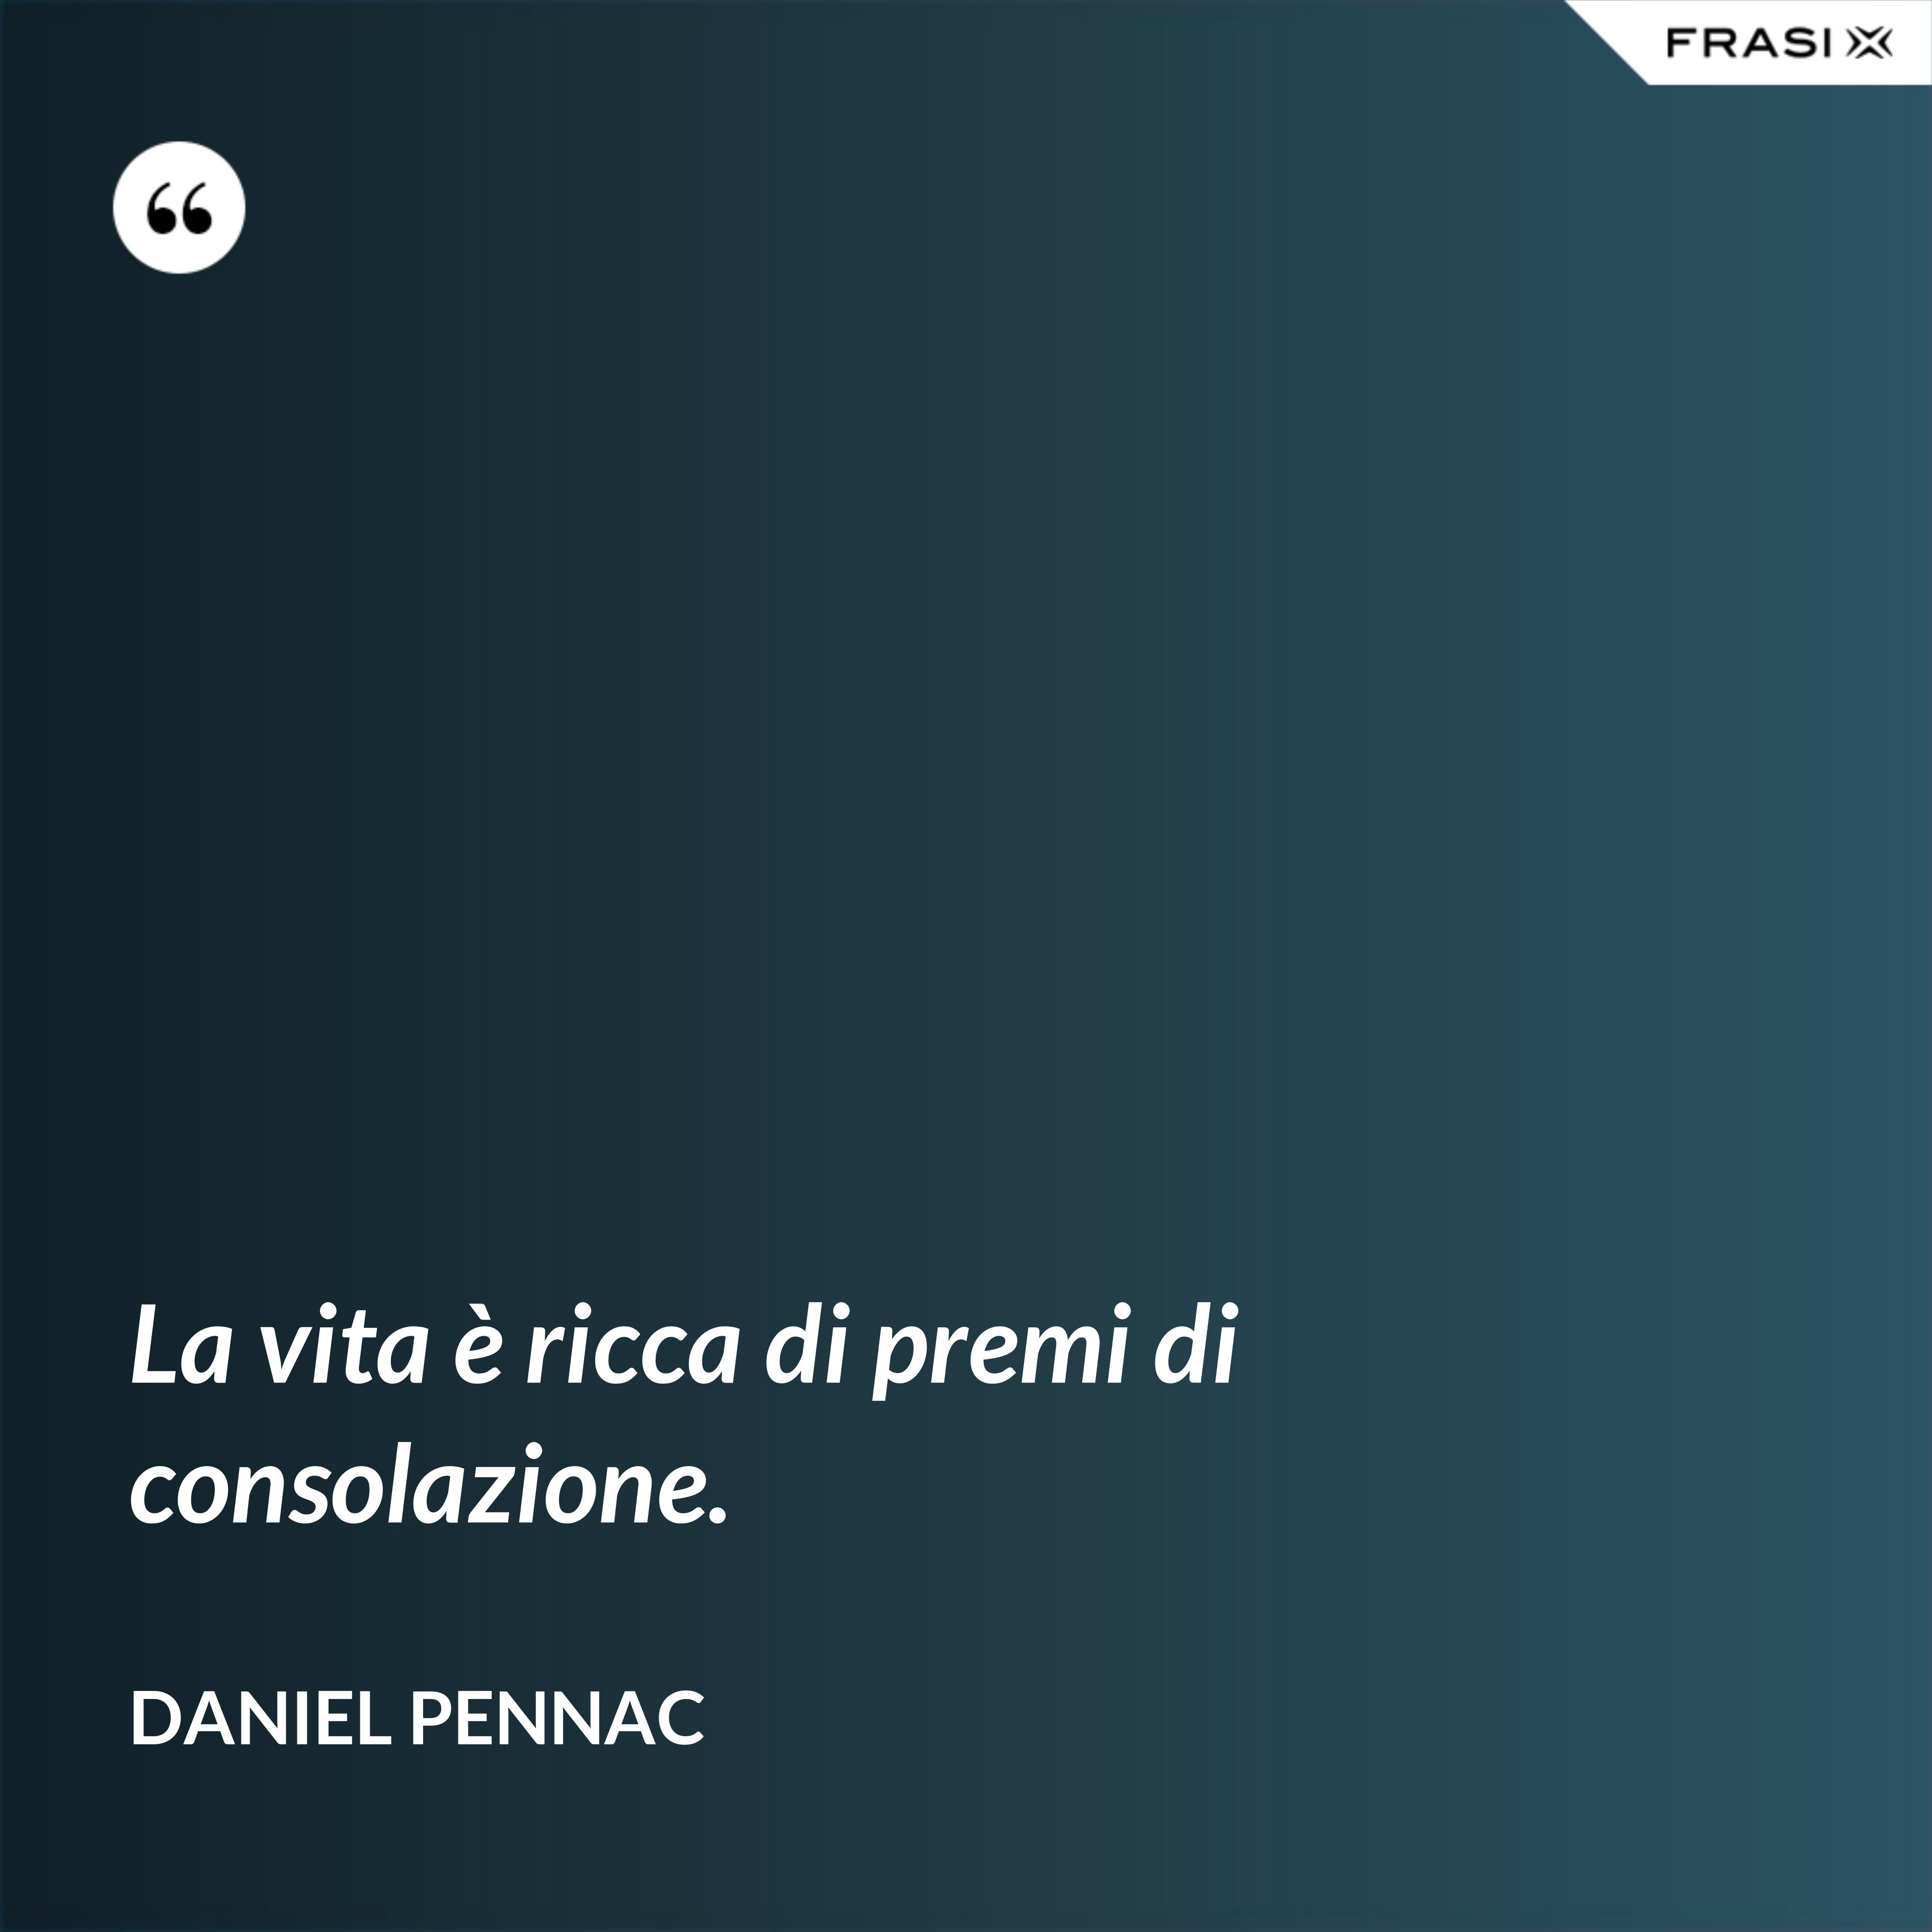 La vita è ricca di premi di consolazione. - Daniel Pennac